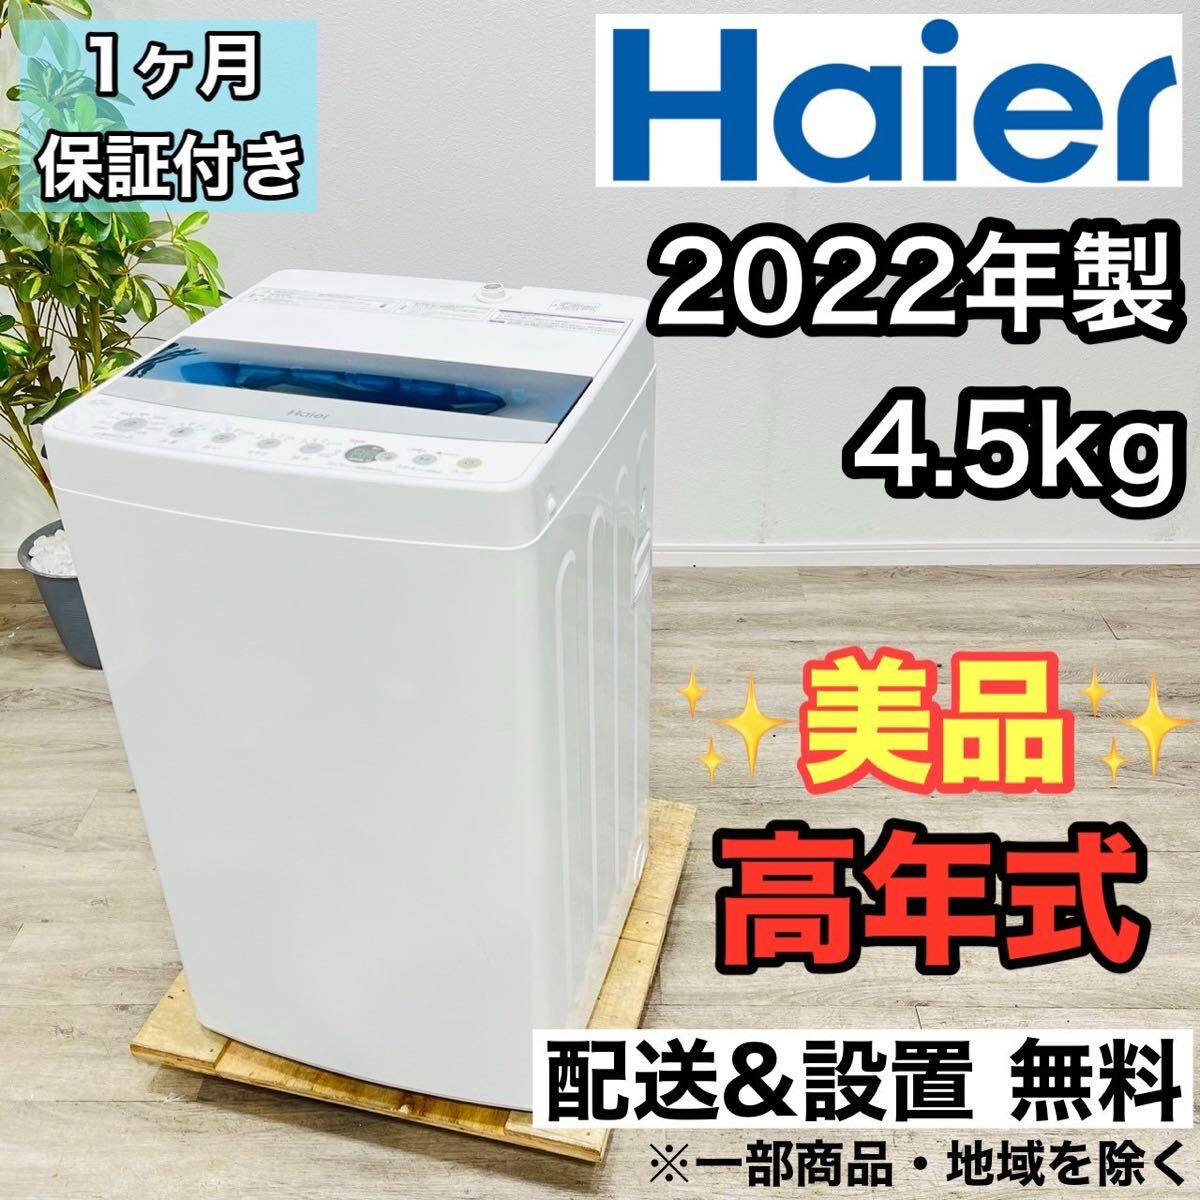 Haier a2290 洗濯機 4.5kg 2022年製 3.5_画像1